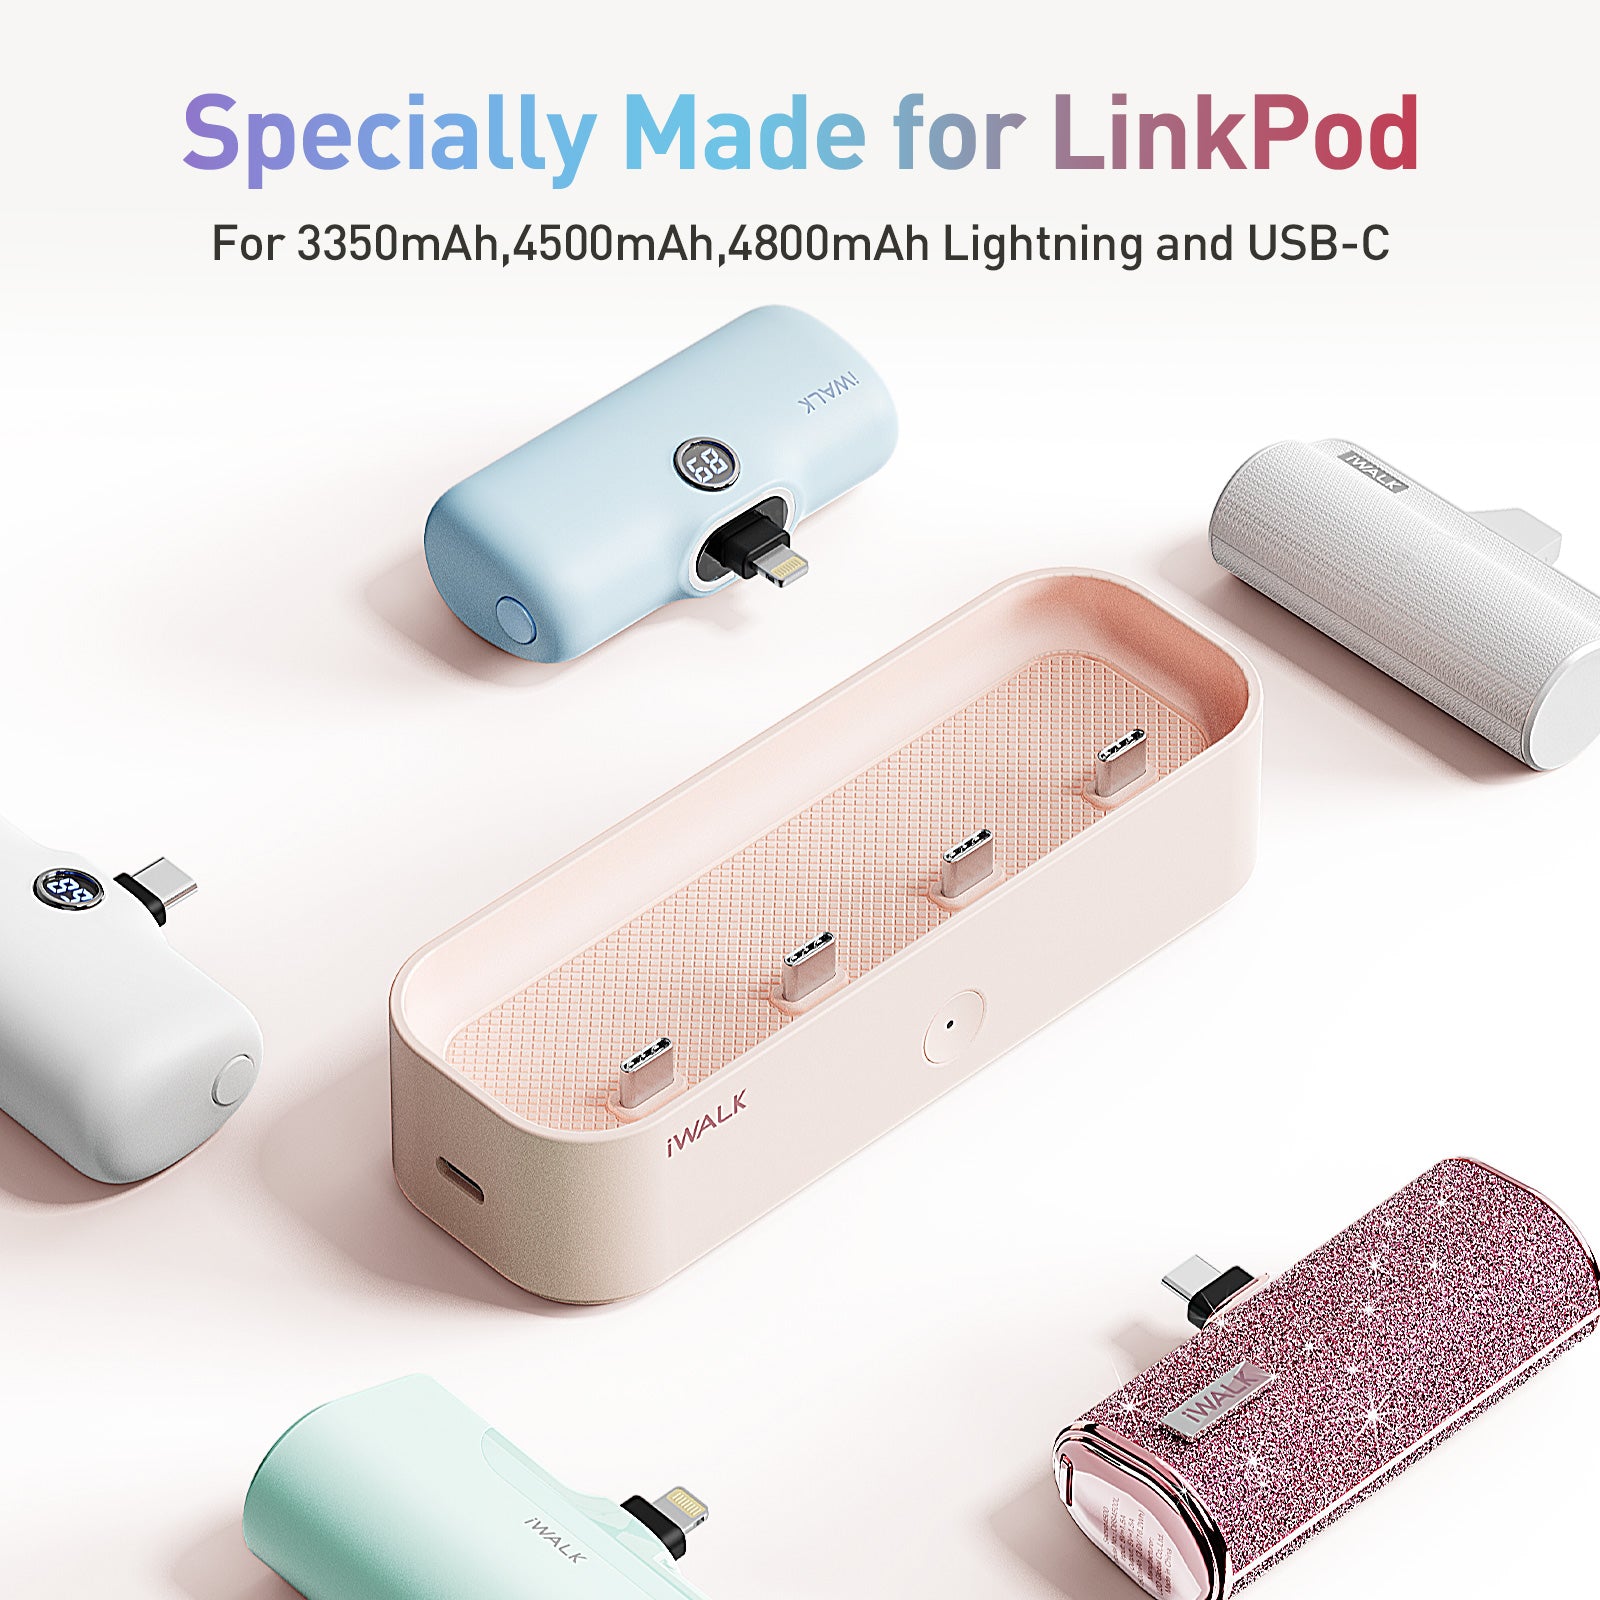 Smartphone Accessories: iWALK LinkPod Lightning Power Bank $28